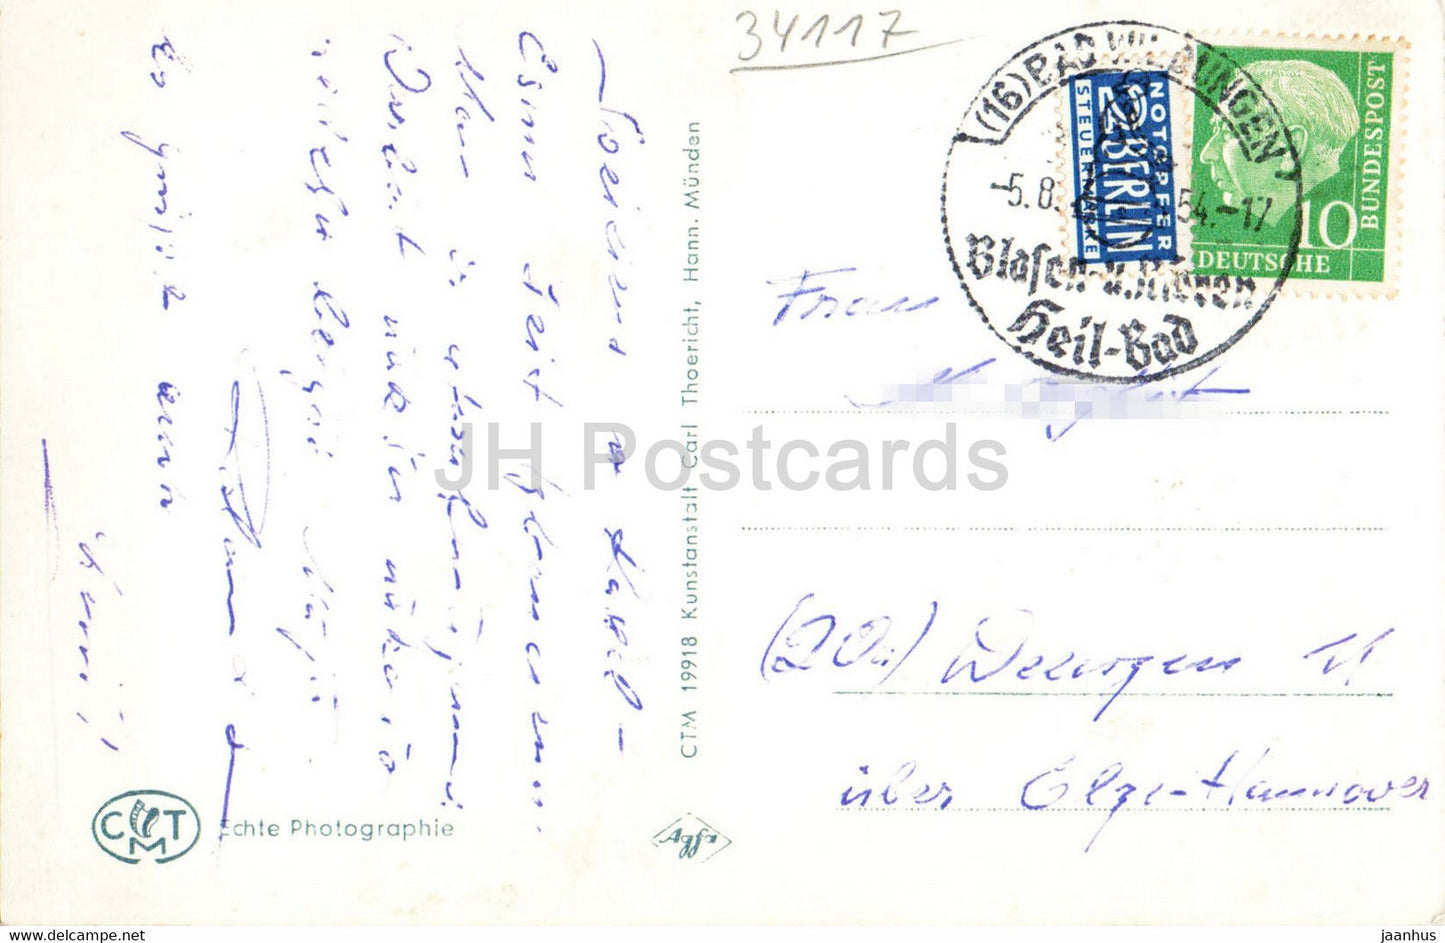 Gruss aus Kassel Wilhelmshohe - Lowenburg - Schloss - old postcard - 1954 - Germany - used